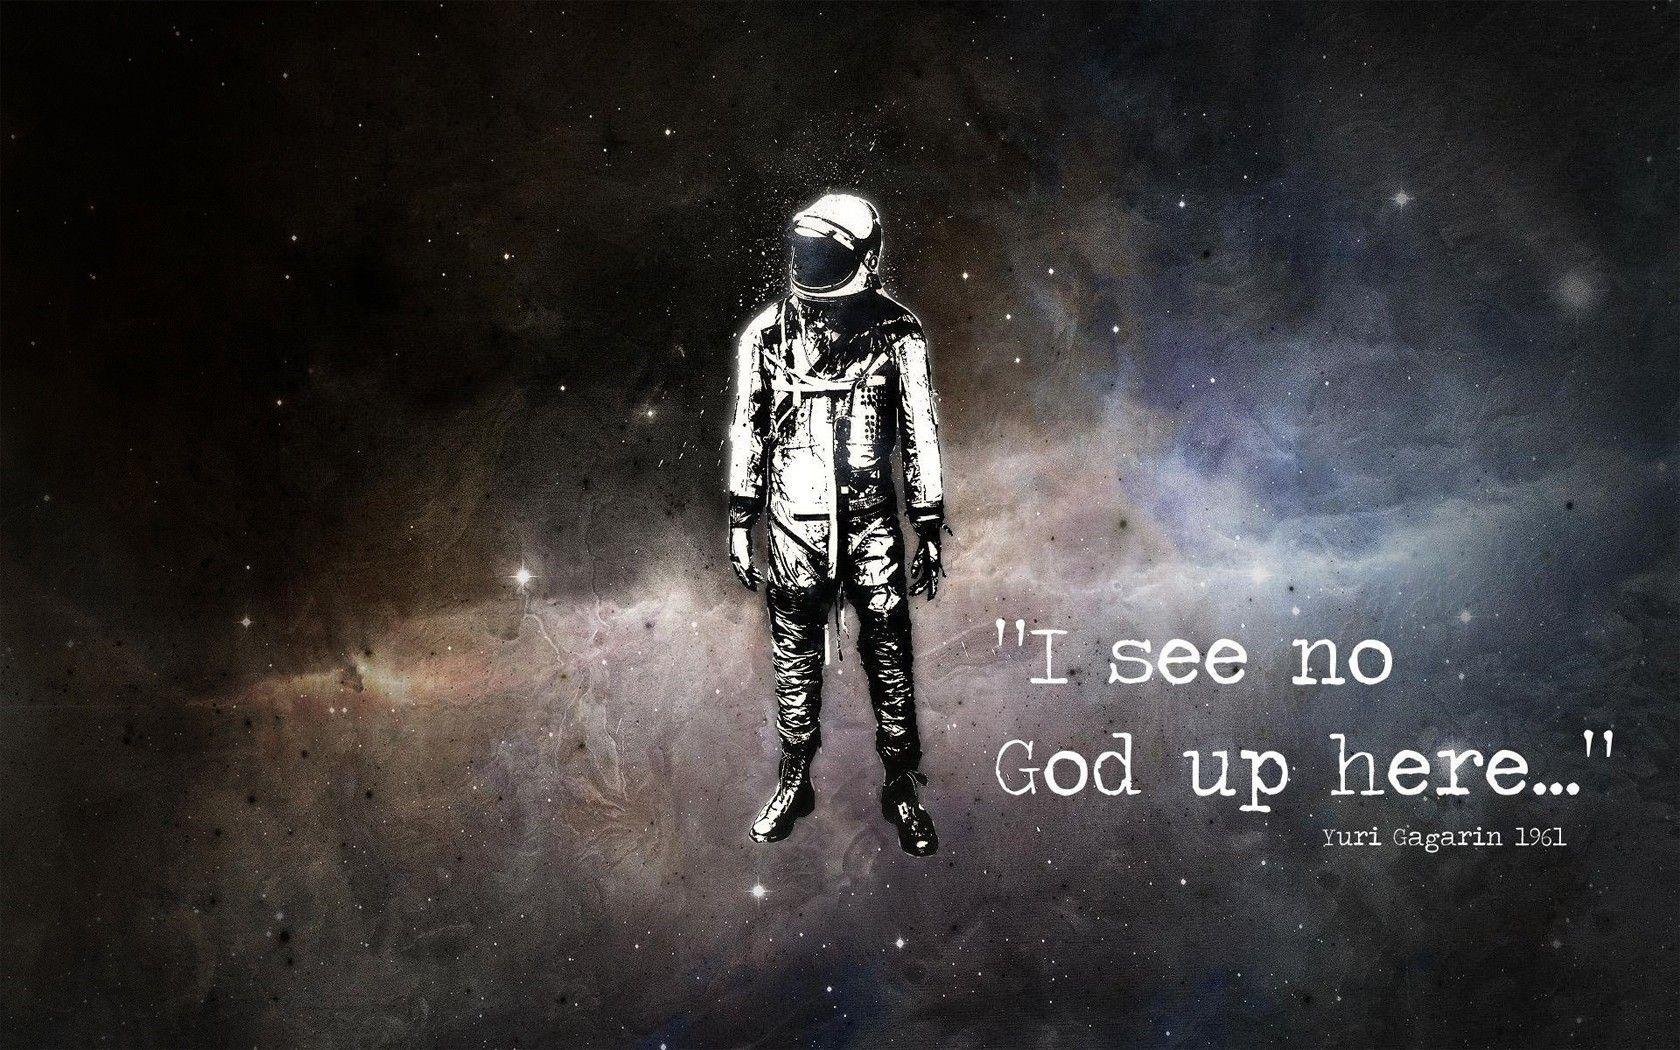 yuri gagarin space astronaut quote stars alex cherry atheism